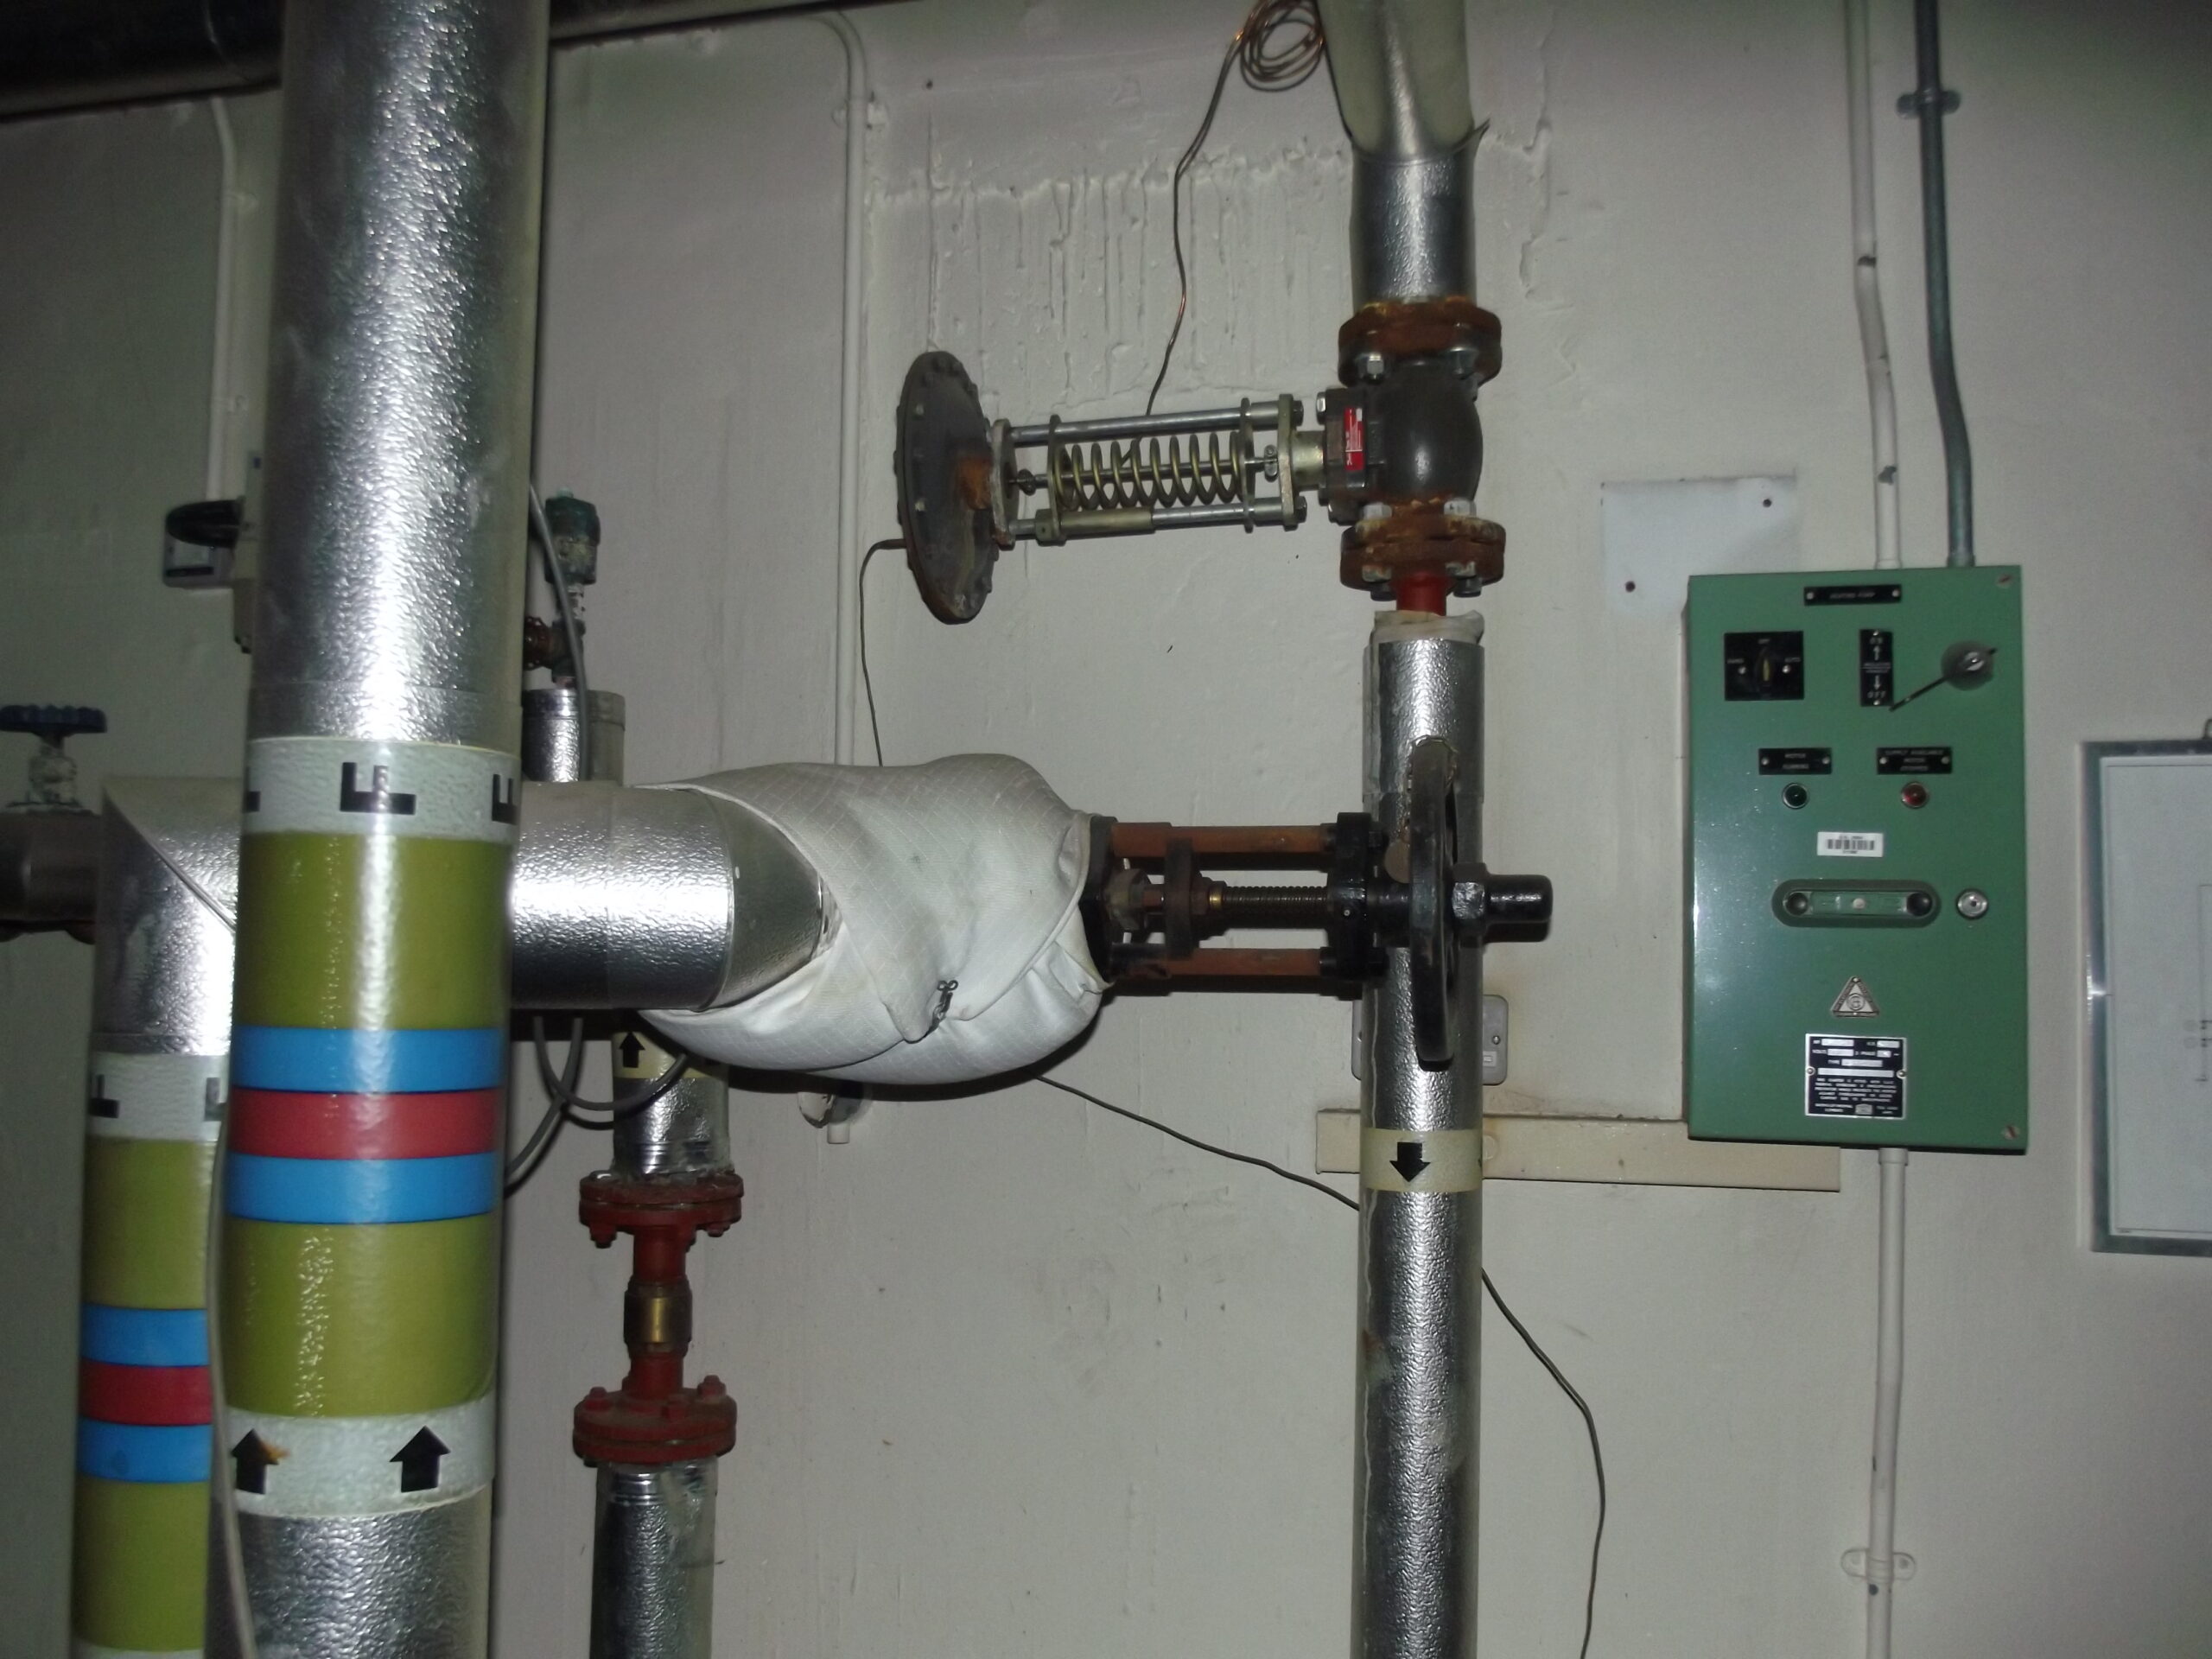 Hot water pipes etc in calorifier room below Staff Restaurant